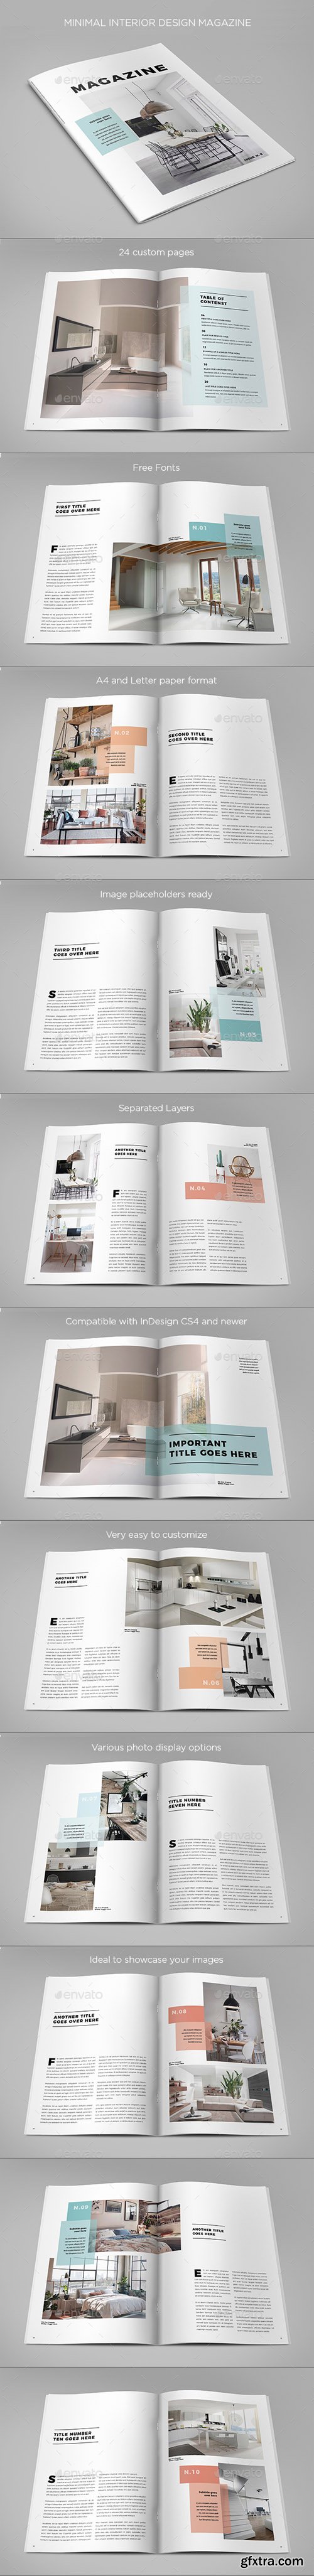 GR - Minimal Interior Design Magazine 20388375